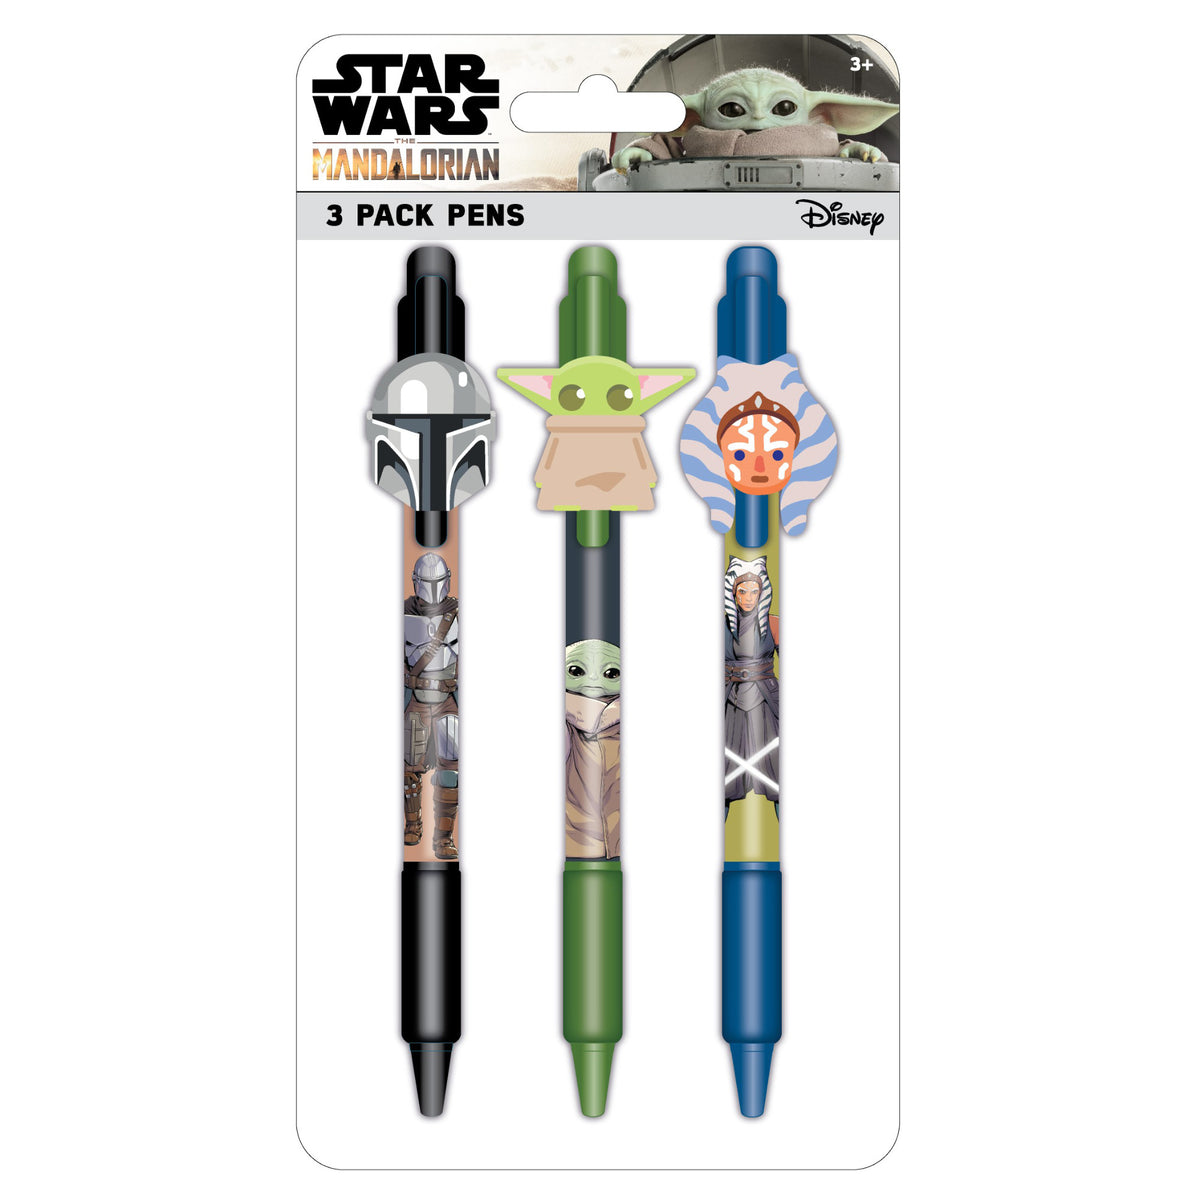 Star Wars the Mandalorian 3 Pen Set